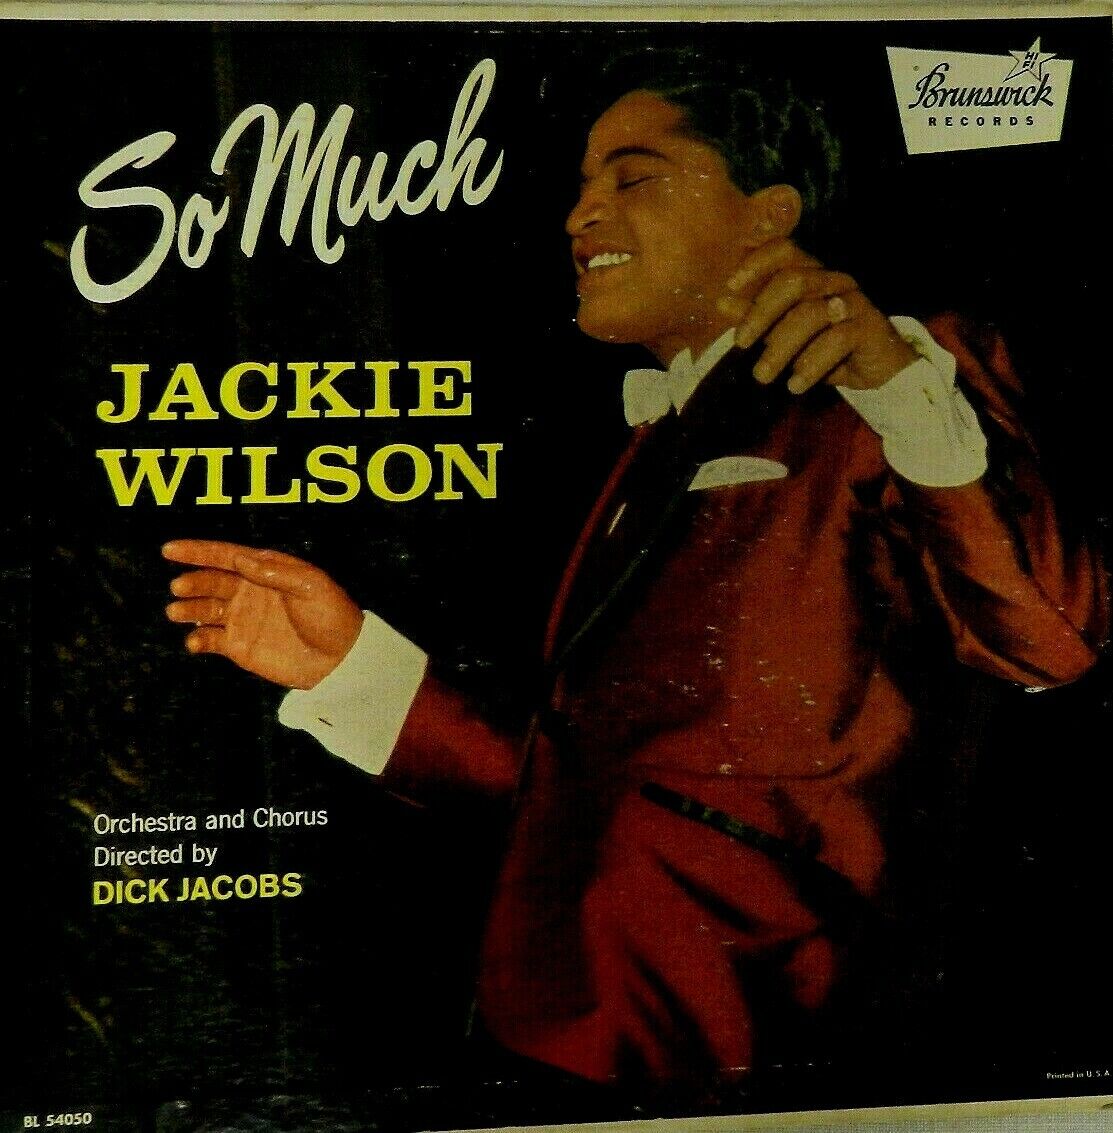 JACKIE WILSON~"SO MUCH"~ "1959-BL-54050~VG+/VG+"~BLACK LABEL"~LP!!!